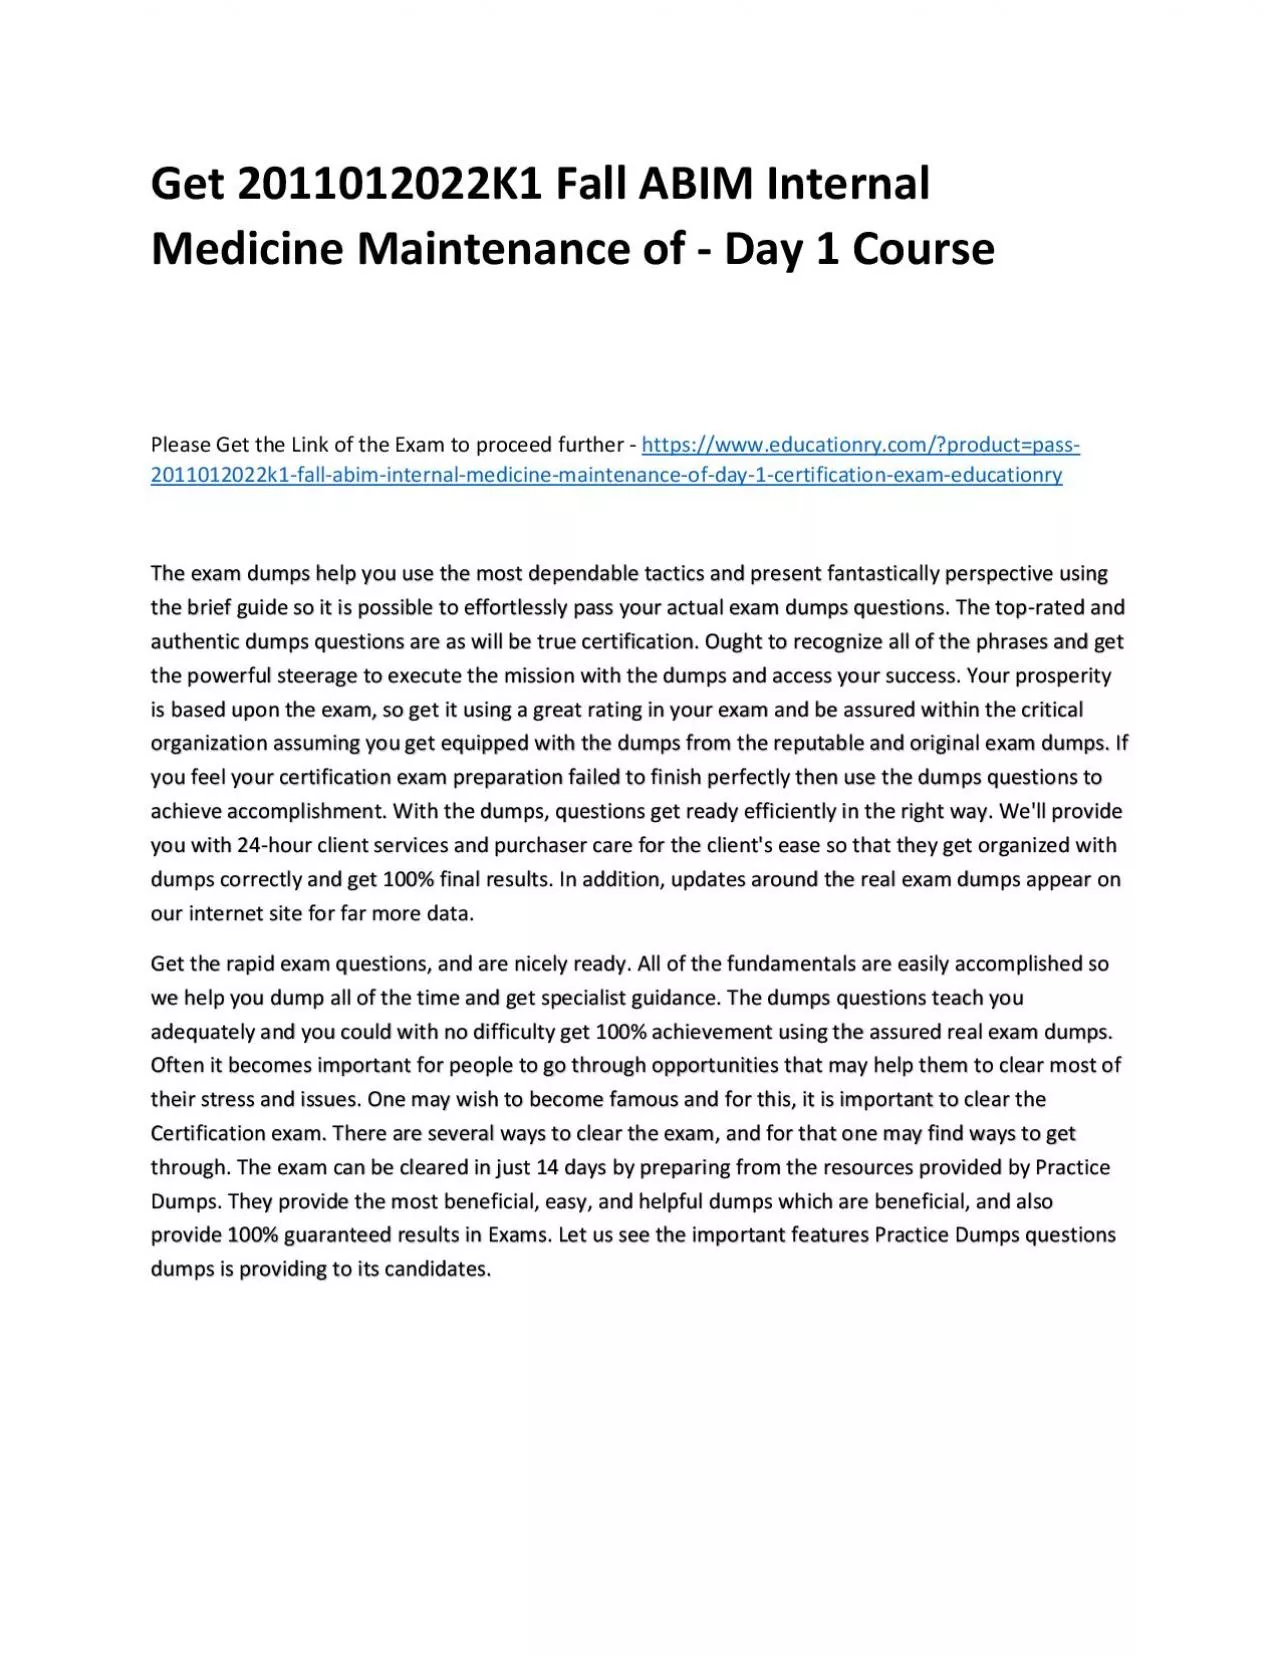 Get 2011012022K1 Fall ABIM Internal Medicine Maintenance of - Day 1 Practice Course